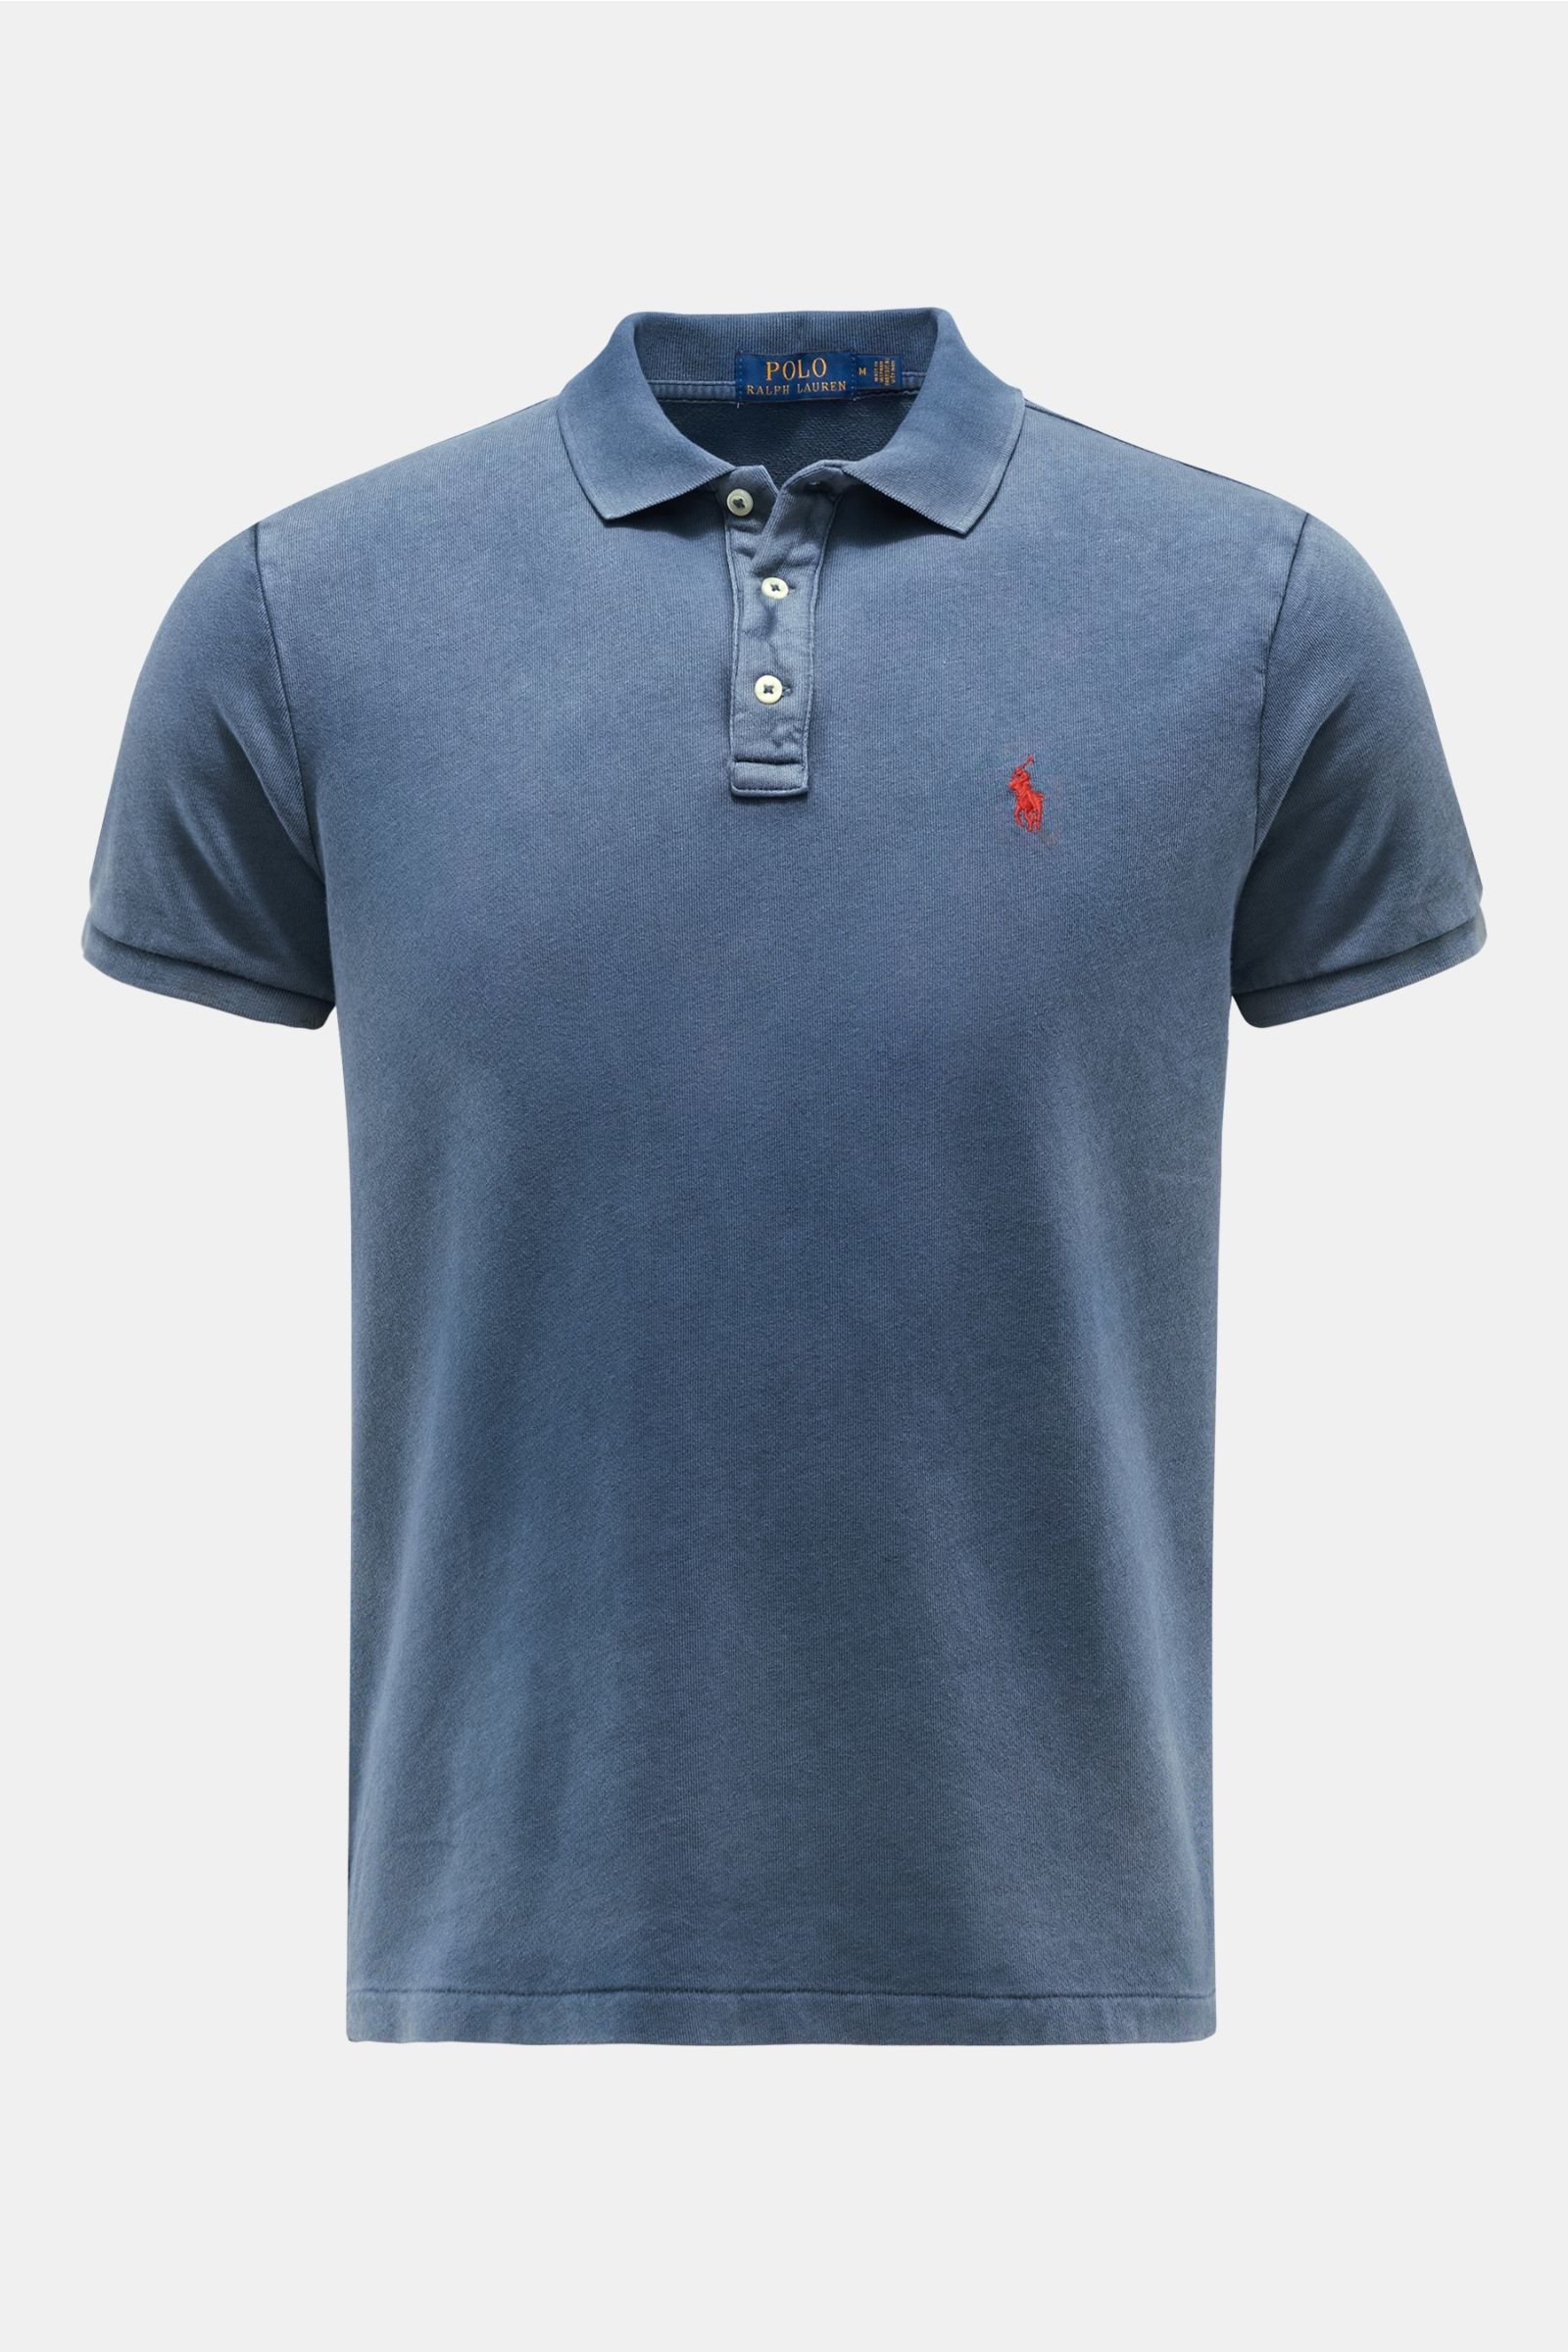 Jersey polo shirt grey-blue